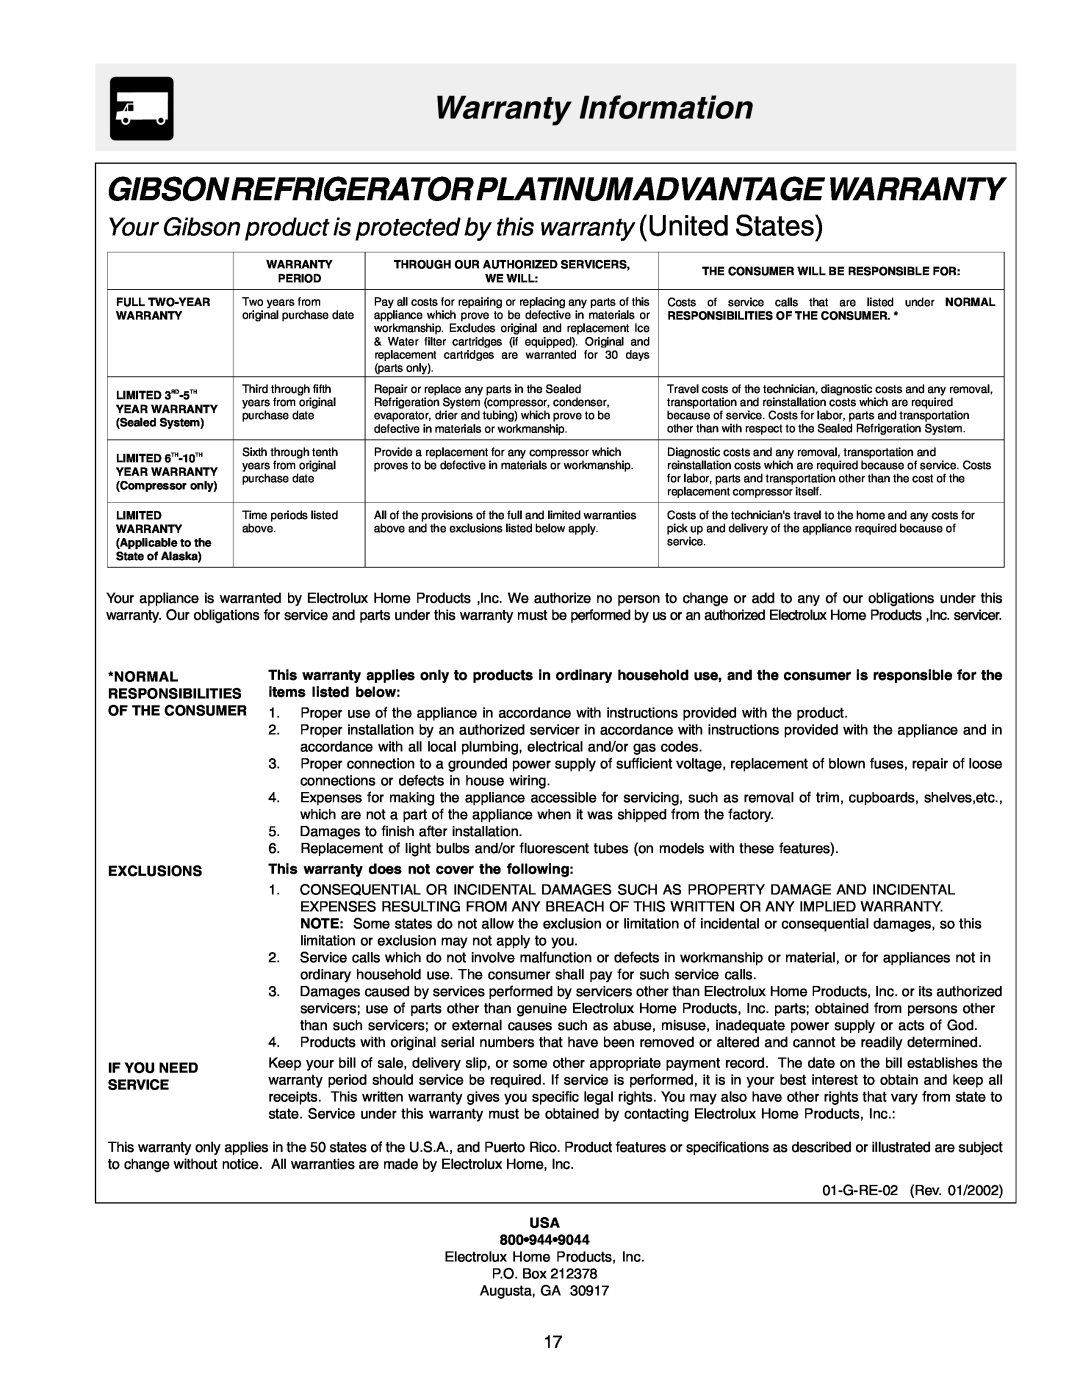 Frigidaire Frigidaire manual Warranty Information GIBSONREFRIGERATORPLATINUMADVANTAGEWARRANTY, Service, Usa 